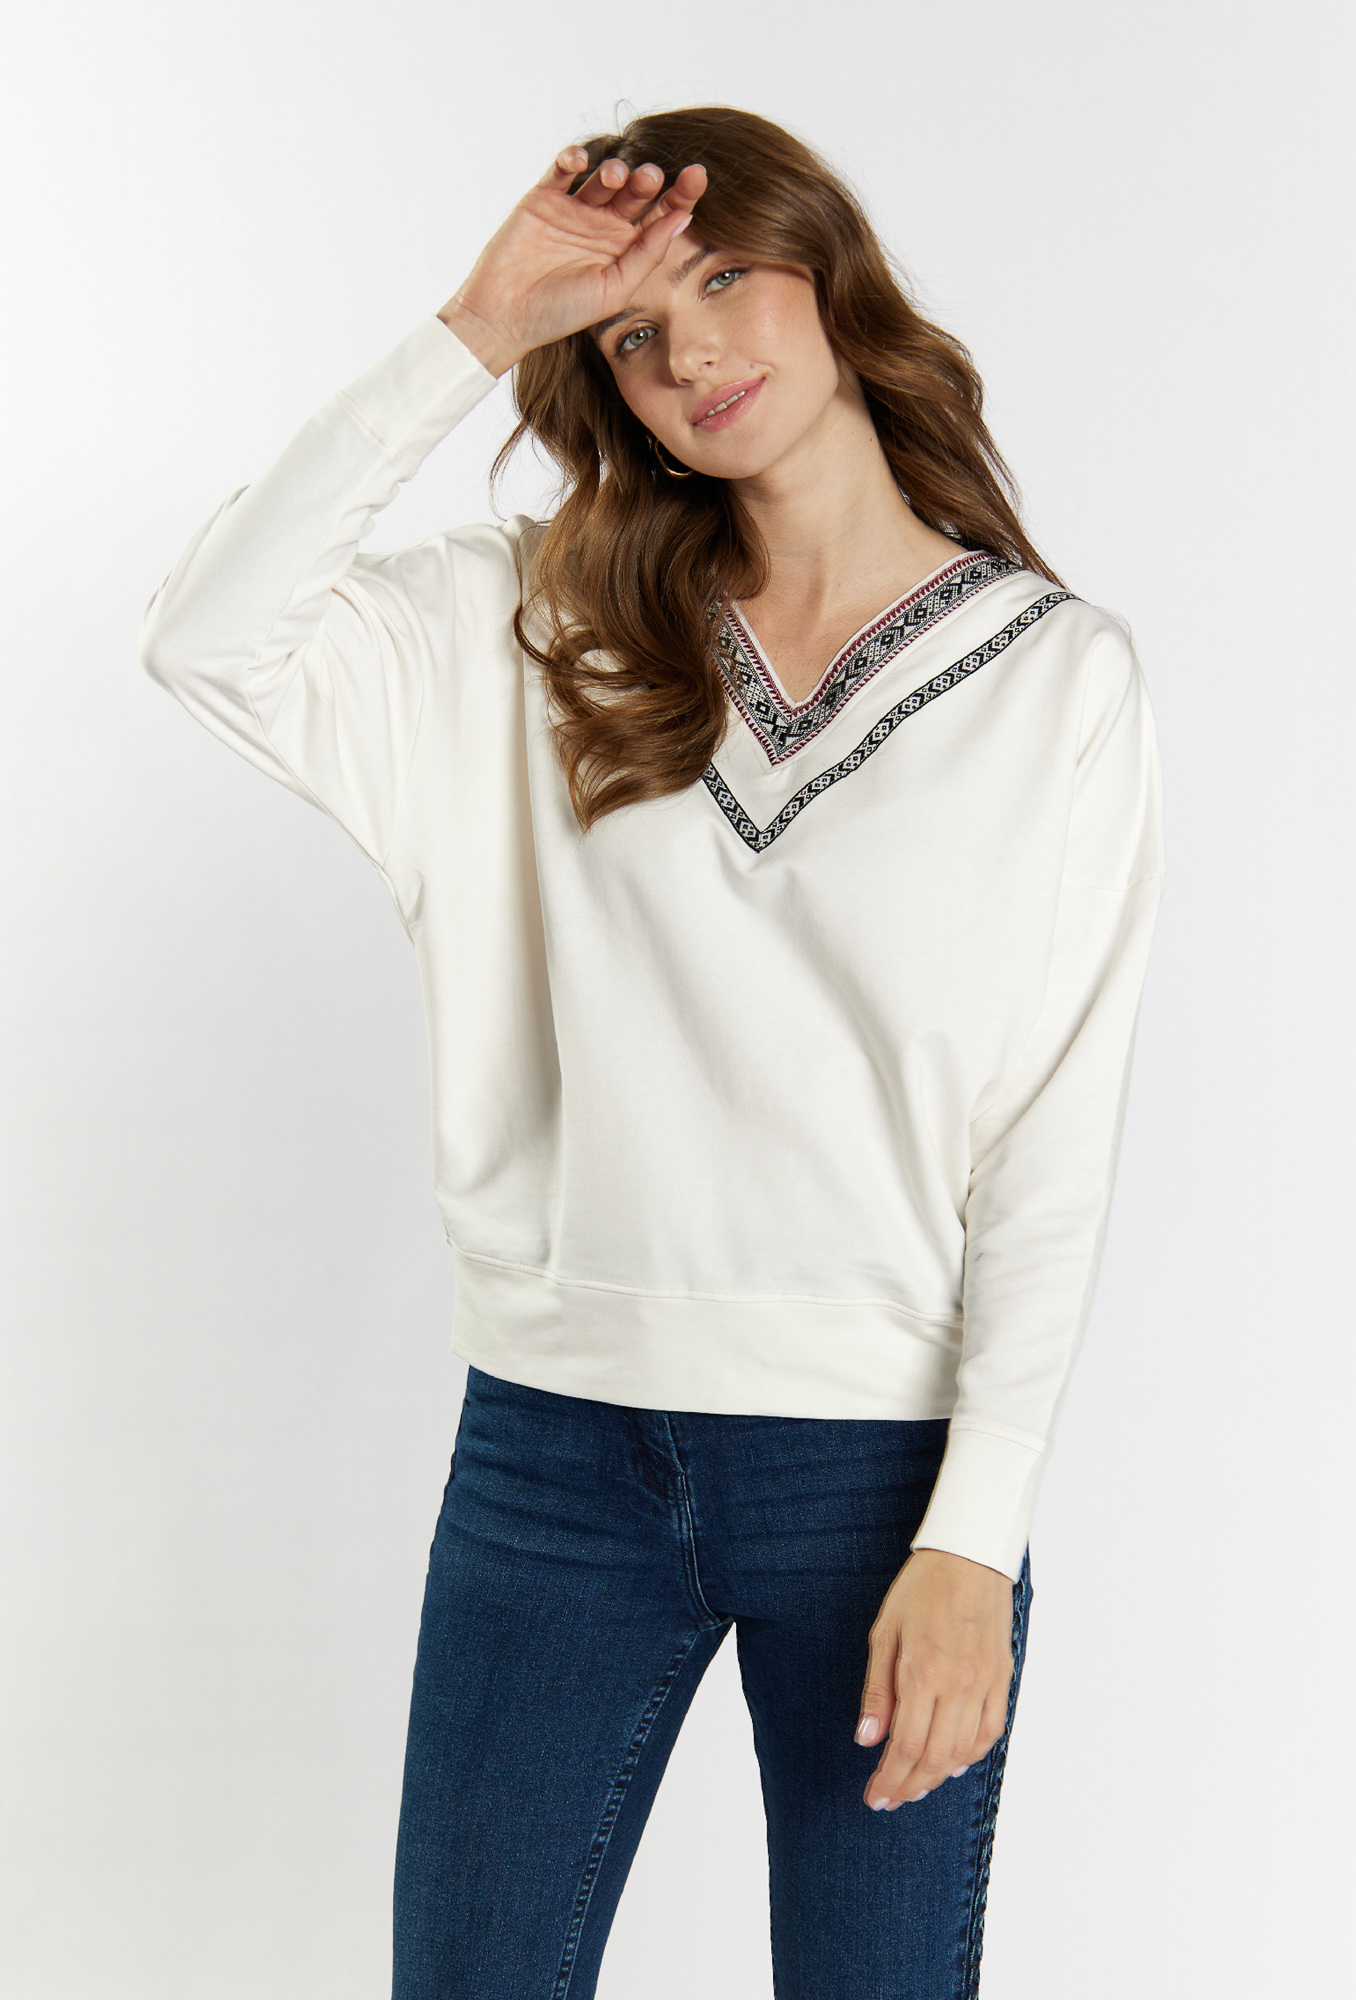 MONNARI Woman's Sweatshirts Cotton Sweater